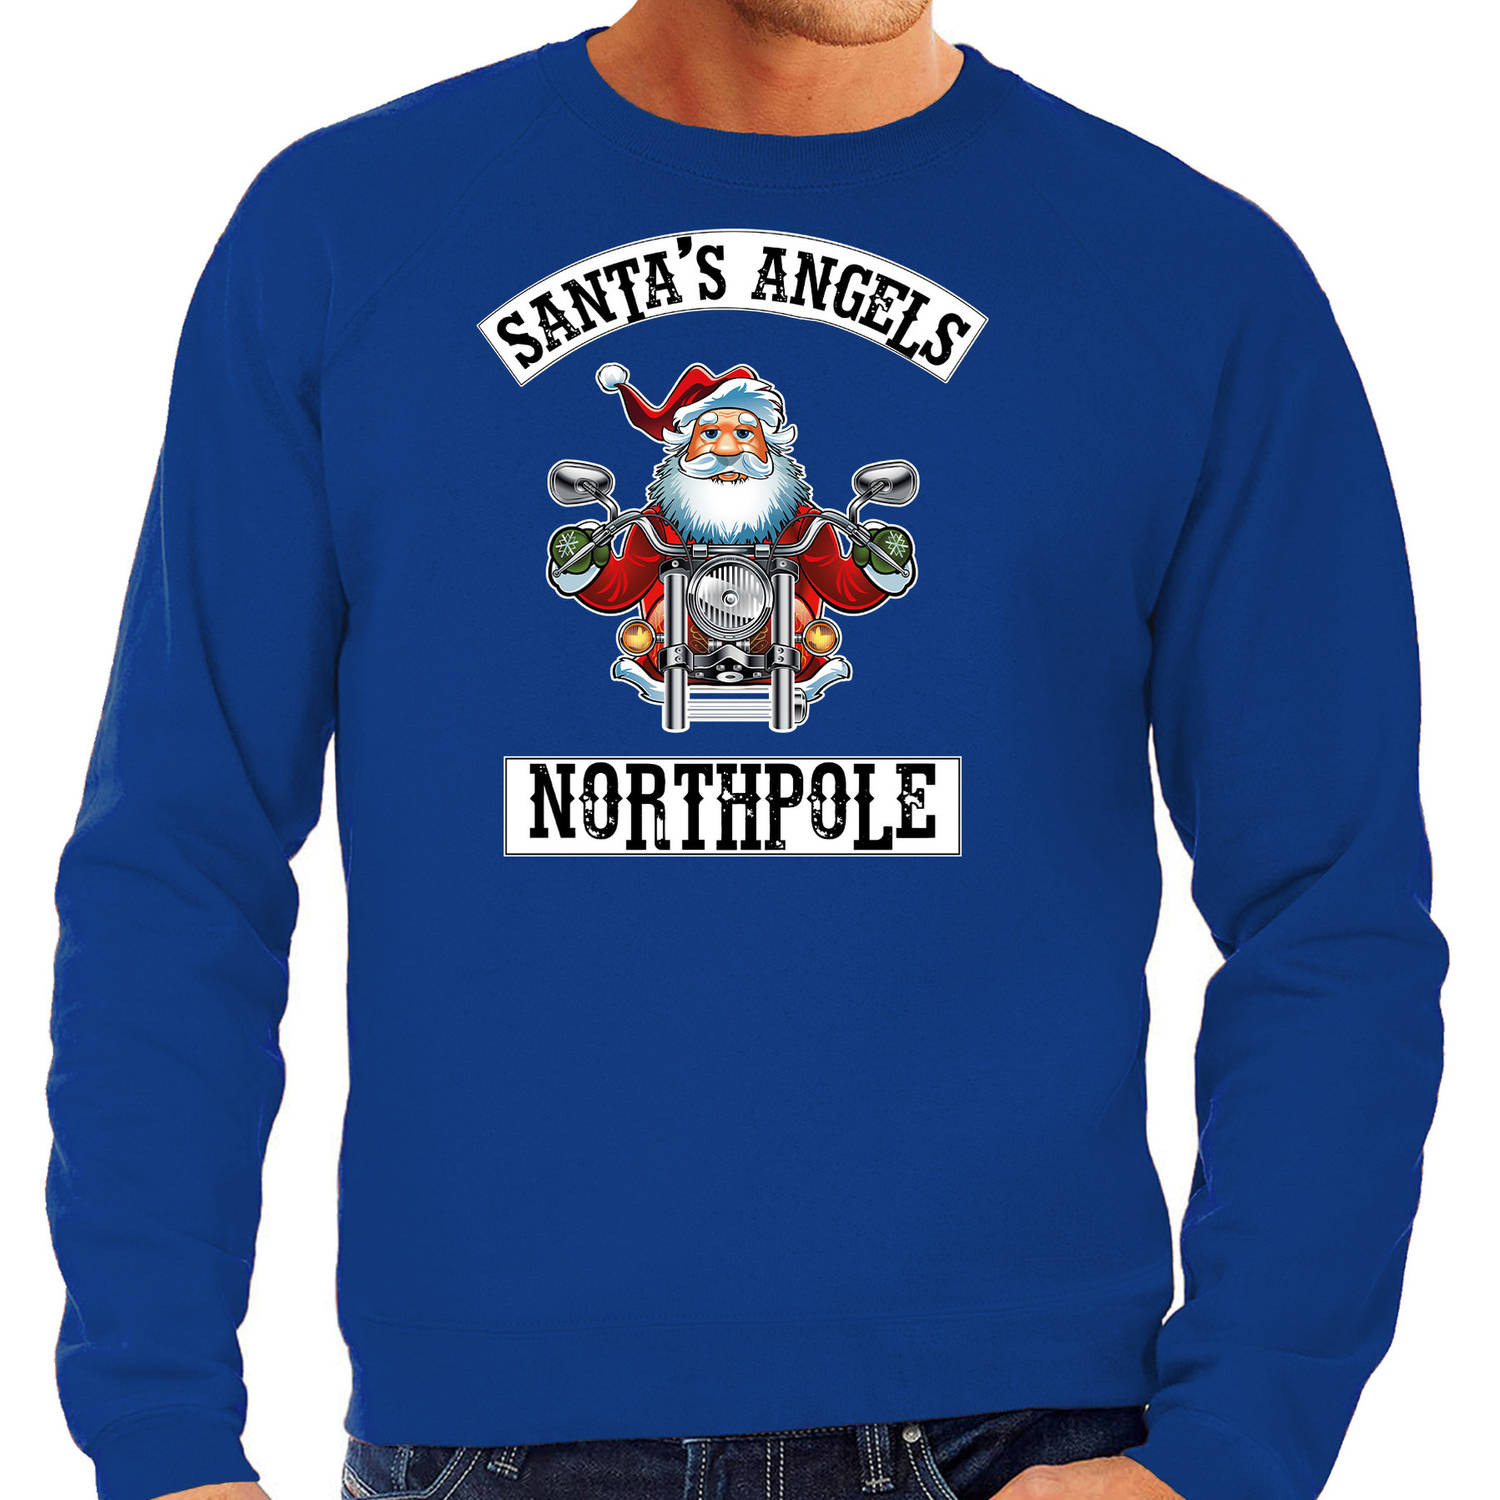 Blauwe Kersttrui / Kerstkleding Santas angels Northpole voor heren XL - kerst truien